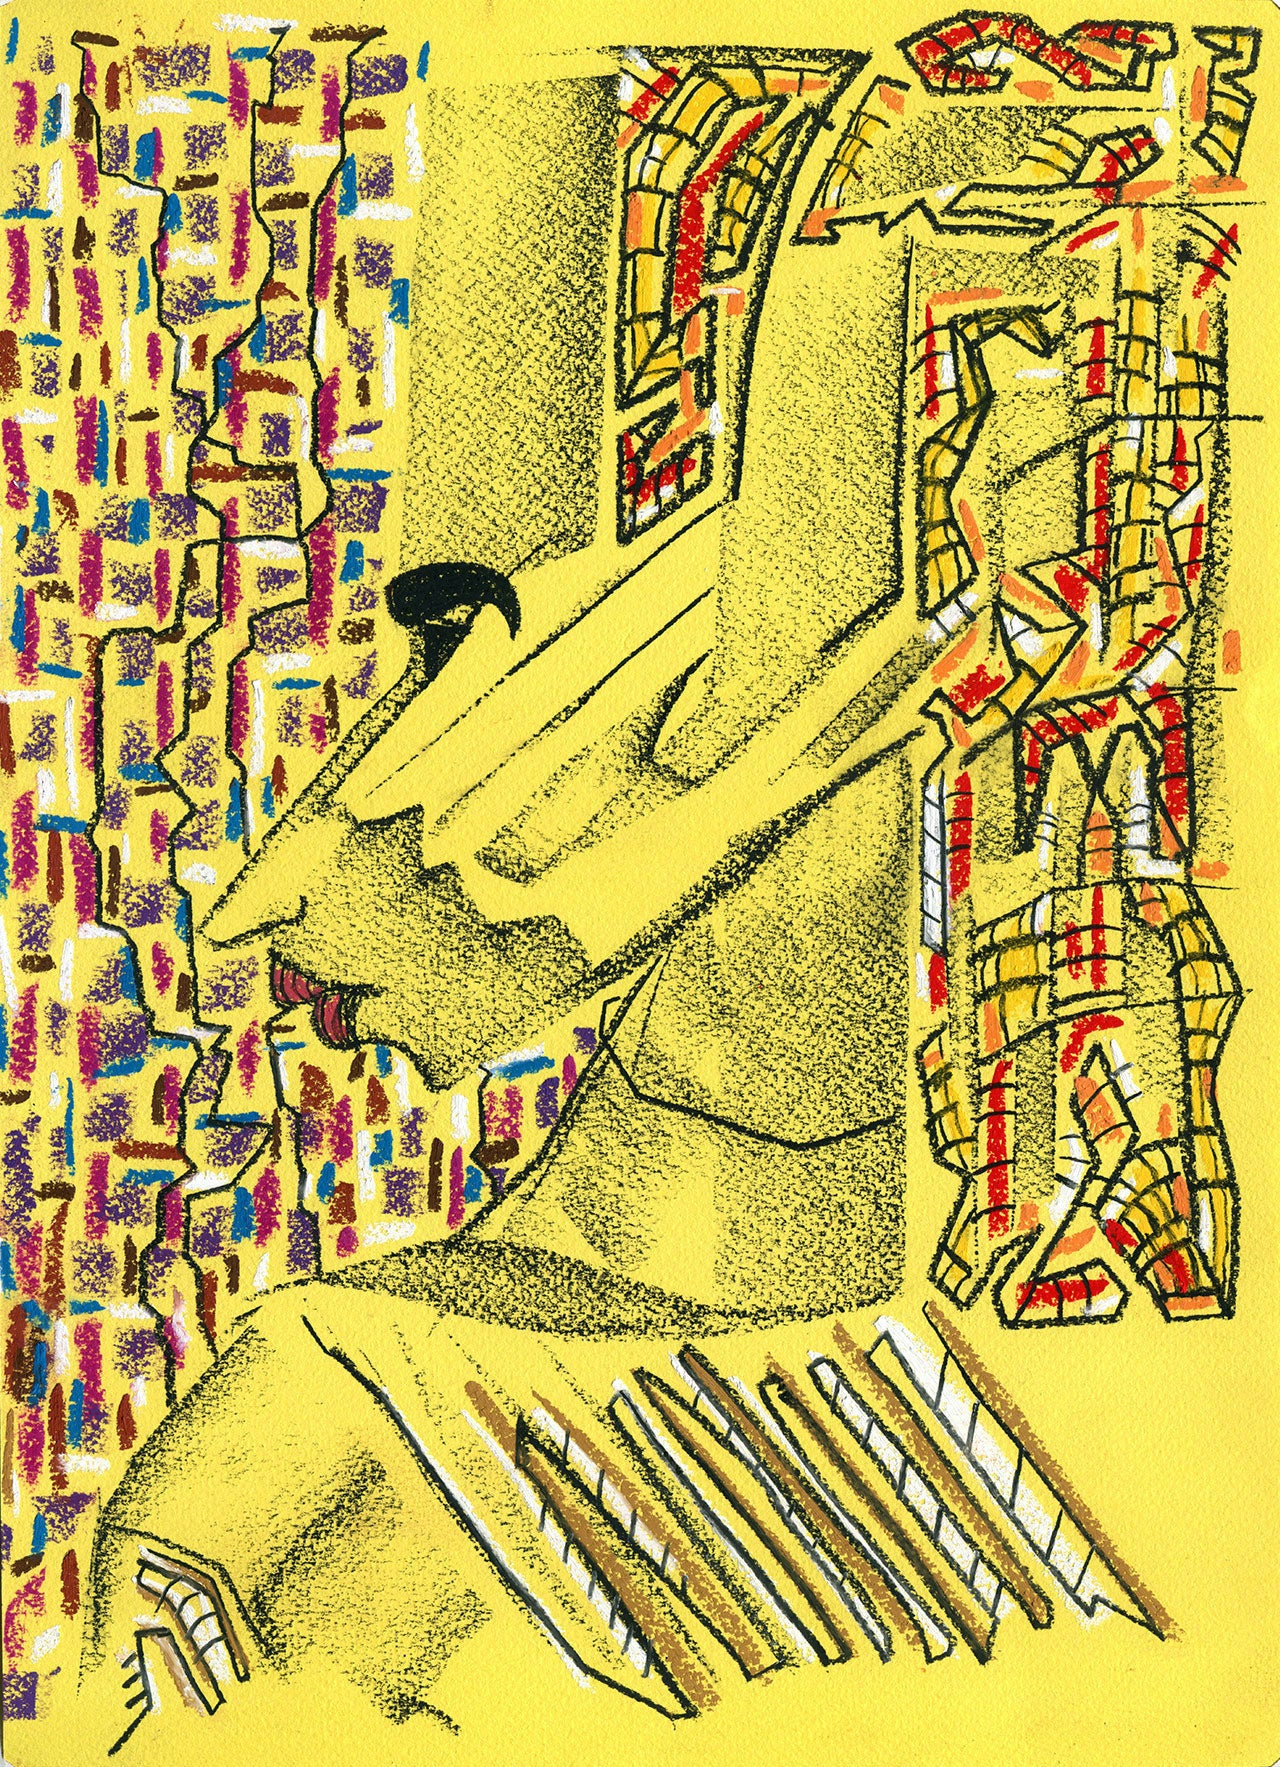 Anubis High quality Giclée print based on original pastel artwork by fine artist Jason Matthew Clark